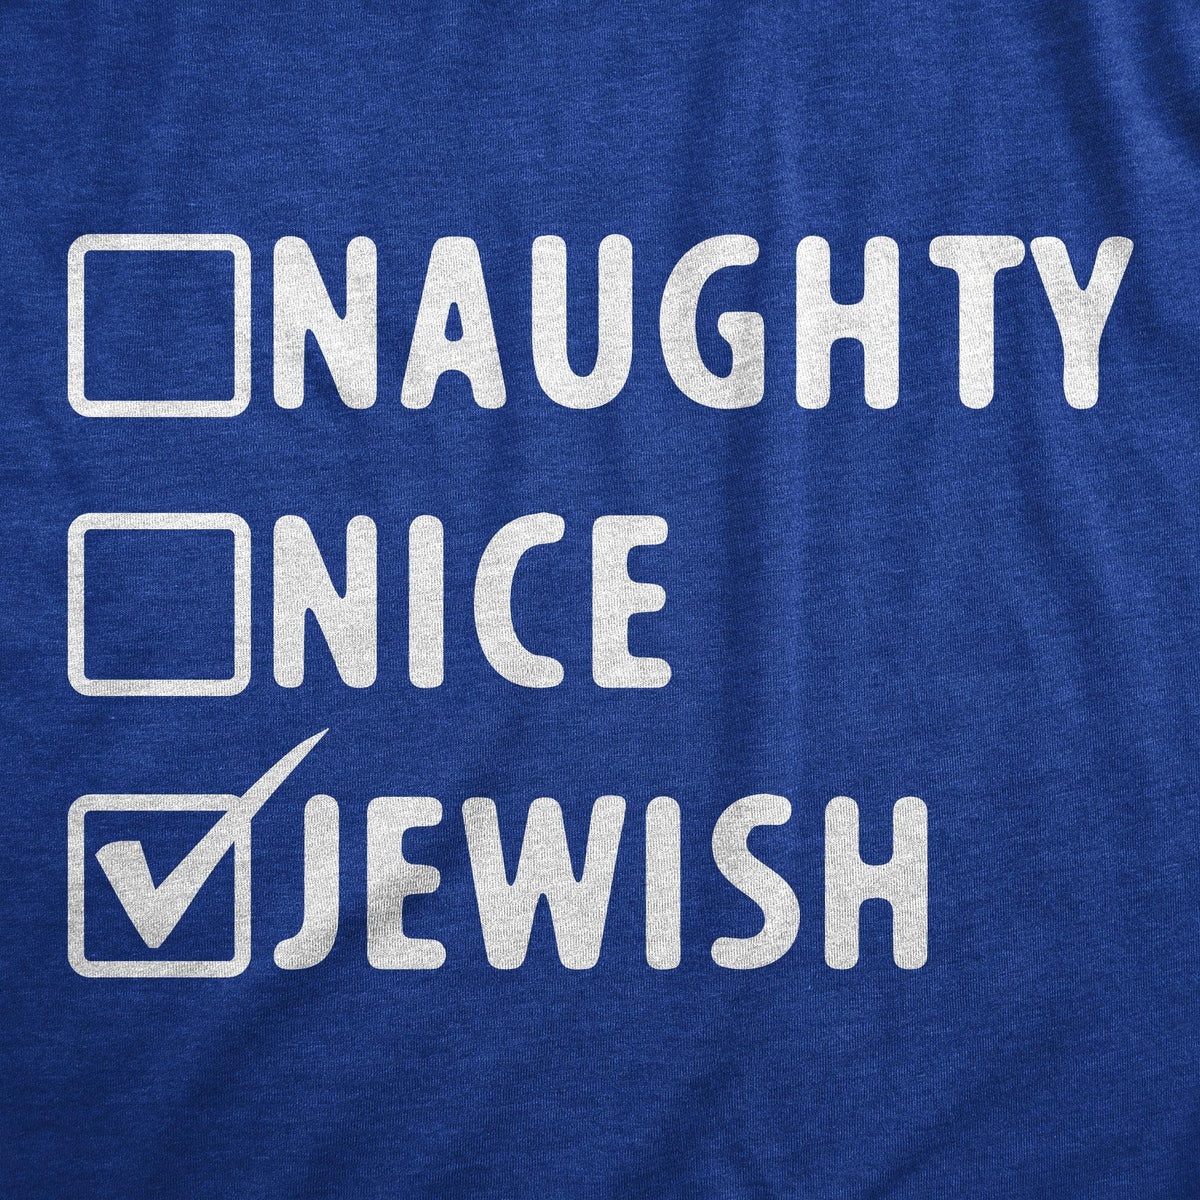 Naughty Nice Jewish Men&#39;s Tshirt  -  Crazy Dog T-Shirts